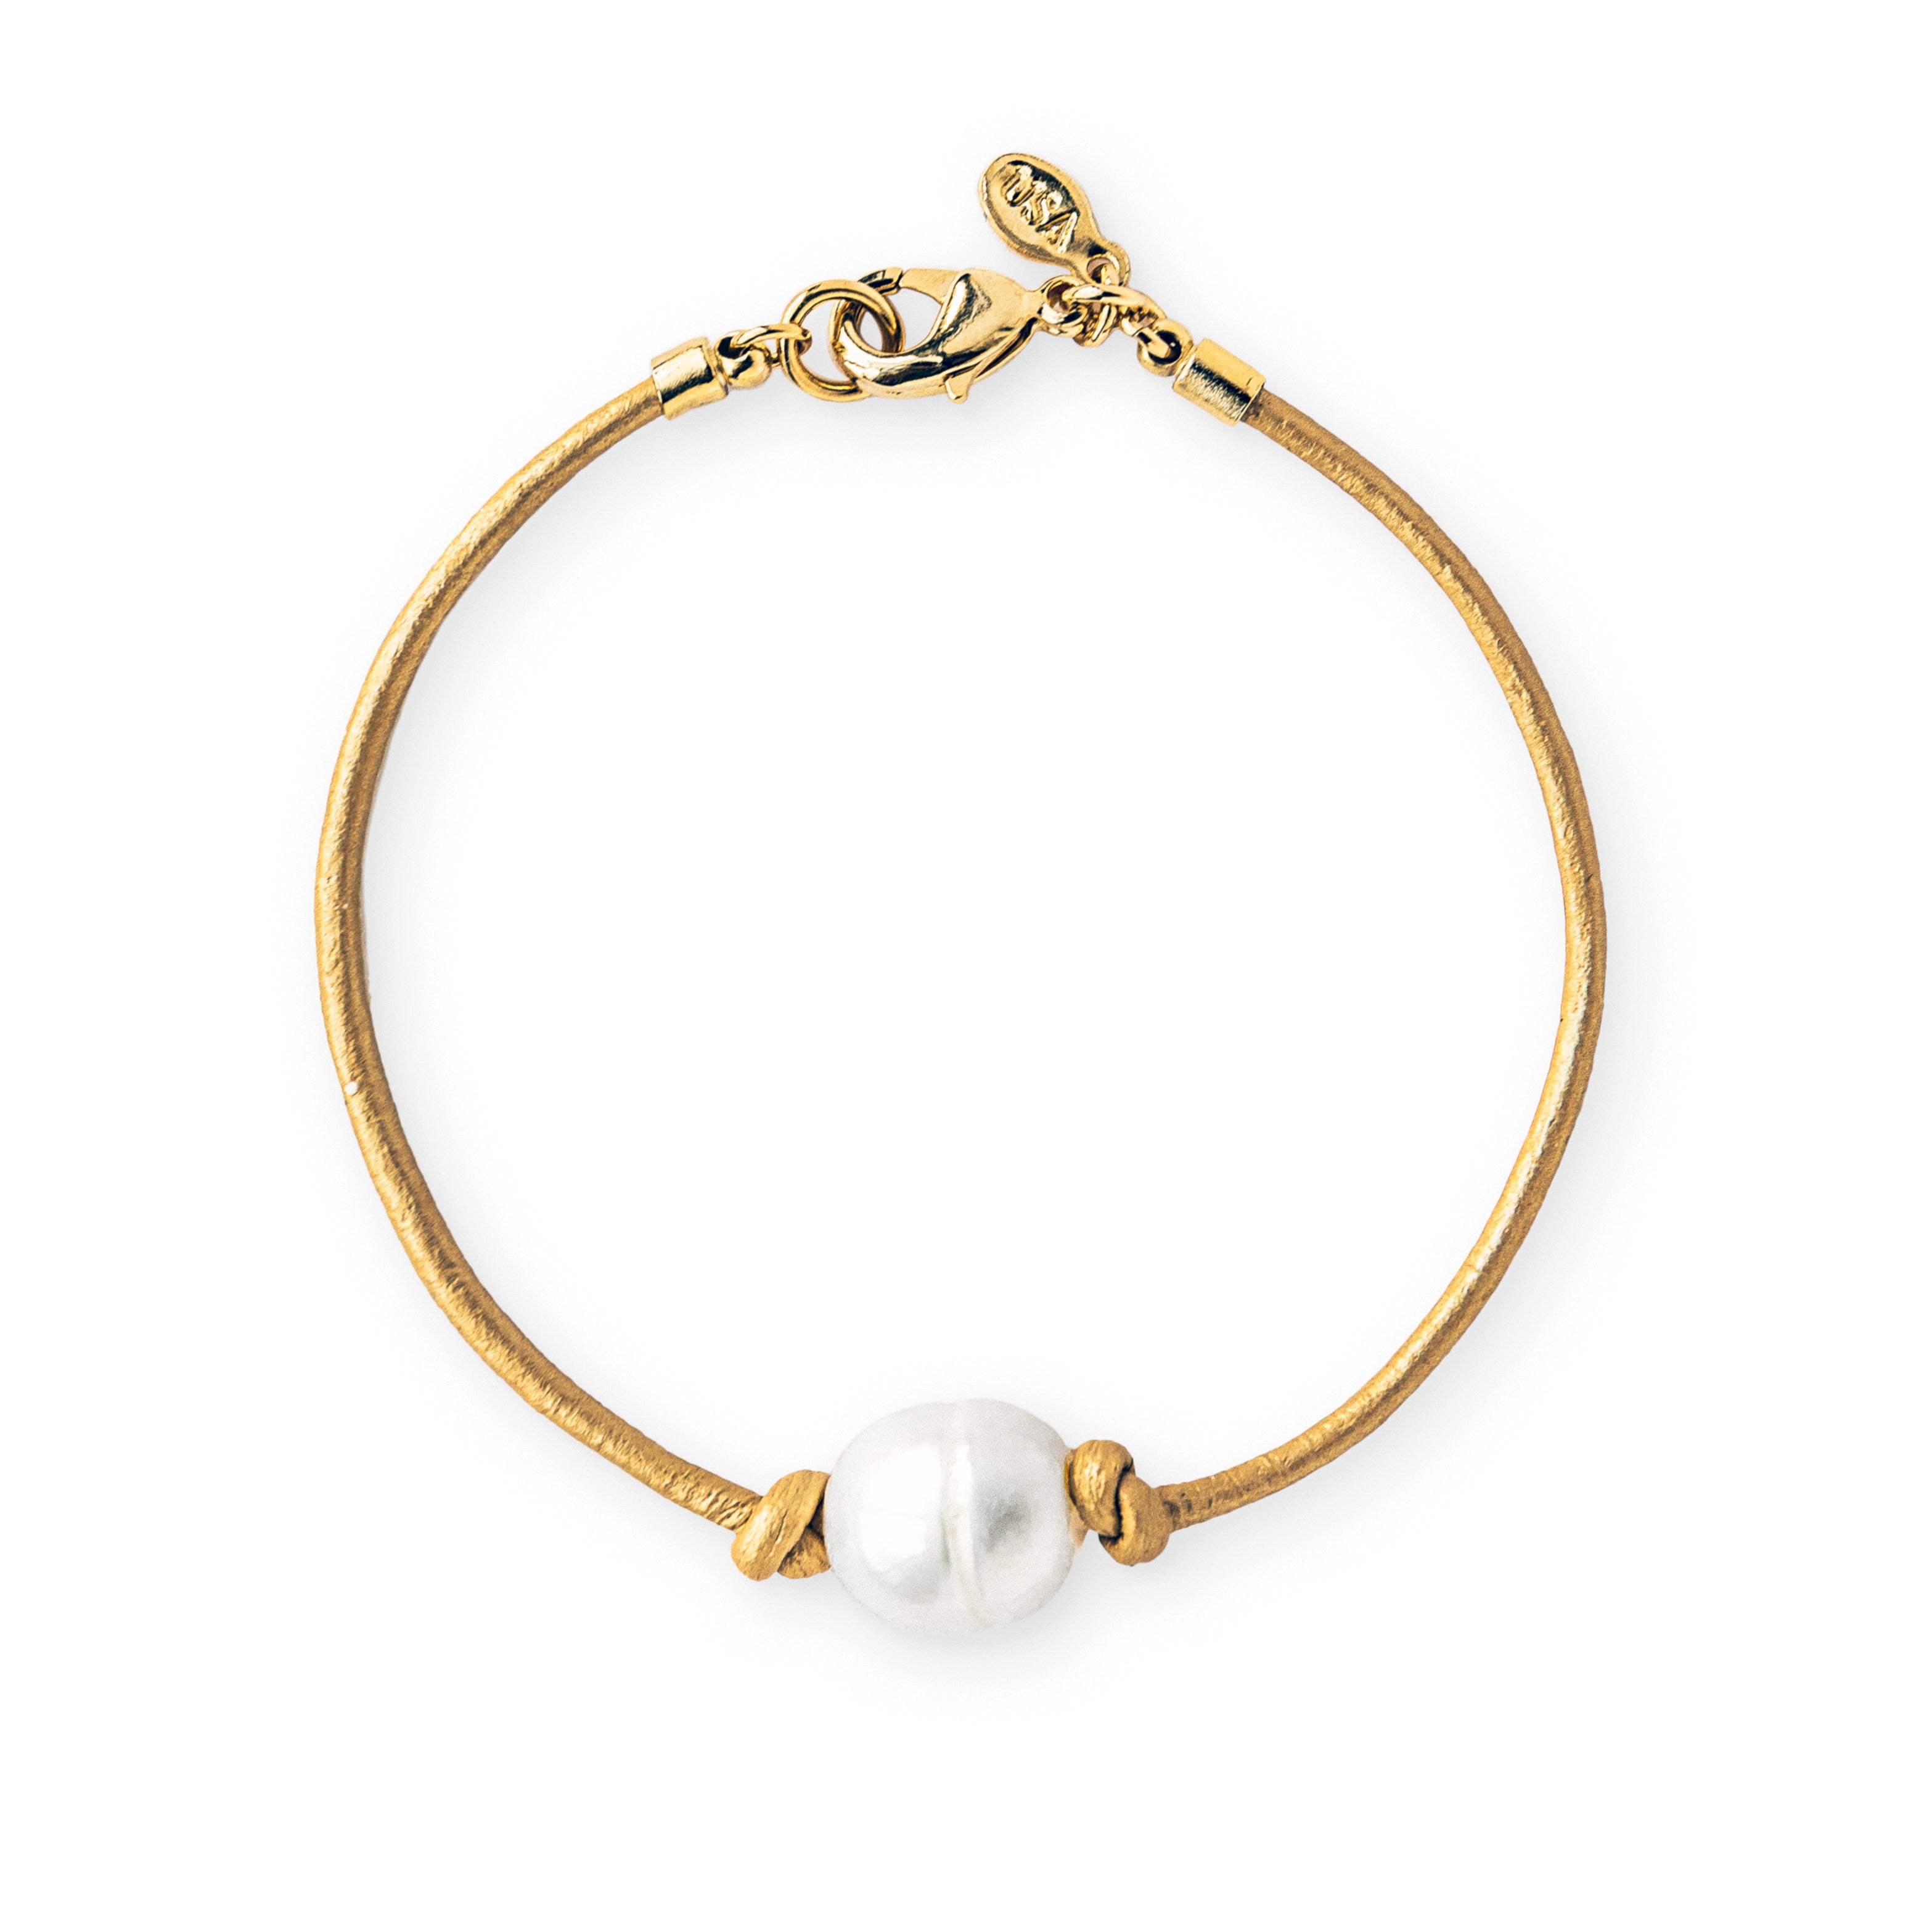 The Gold Four Leaf Clover Bracelet – Kiel James Patrick